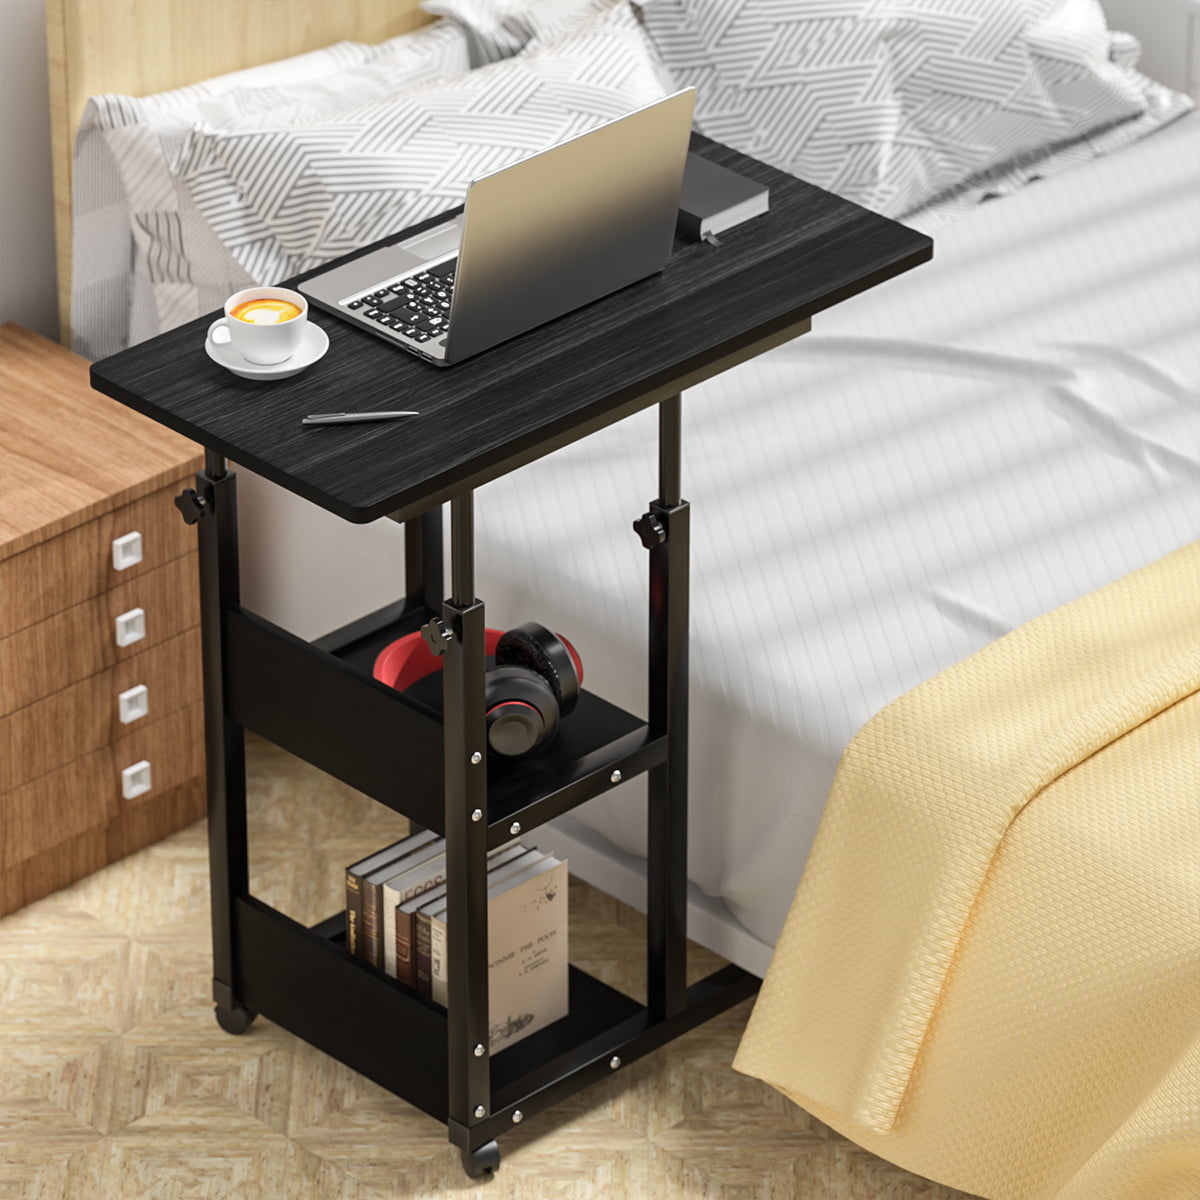 Mobile End Table Height Adjustable Bedside Table Laptop Rolling Cart w/ Shelves 